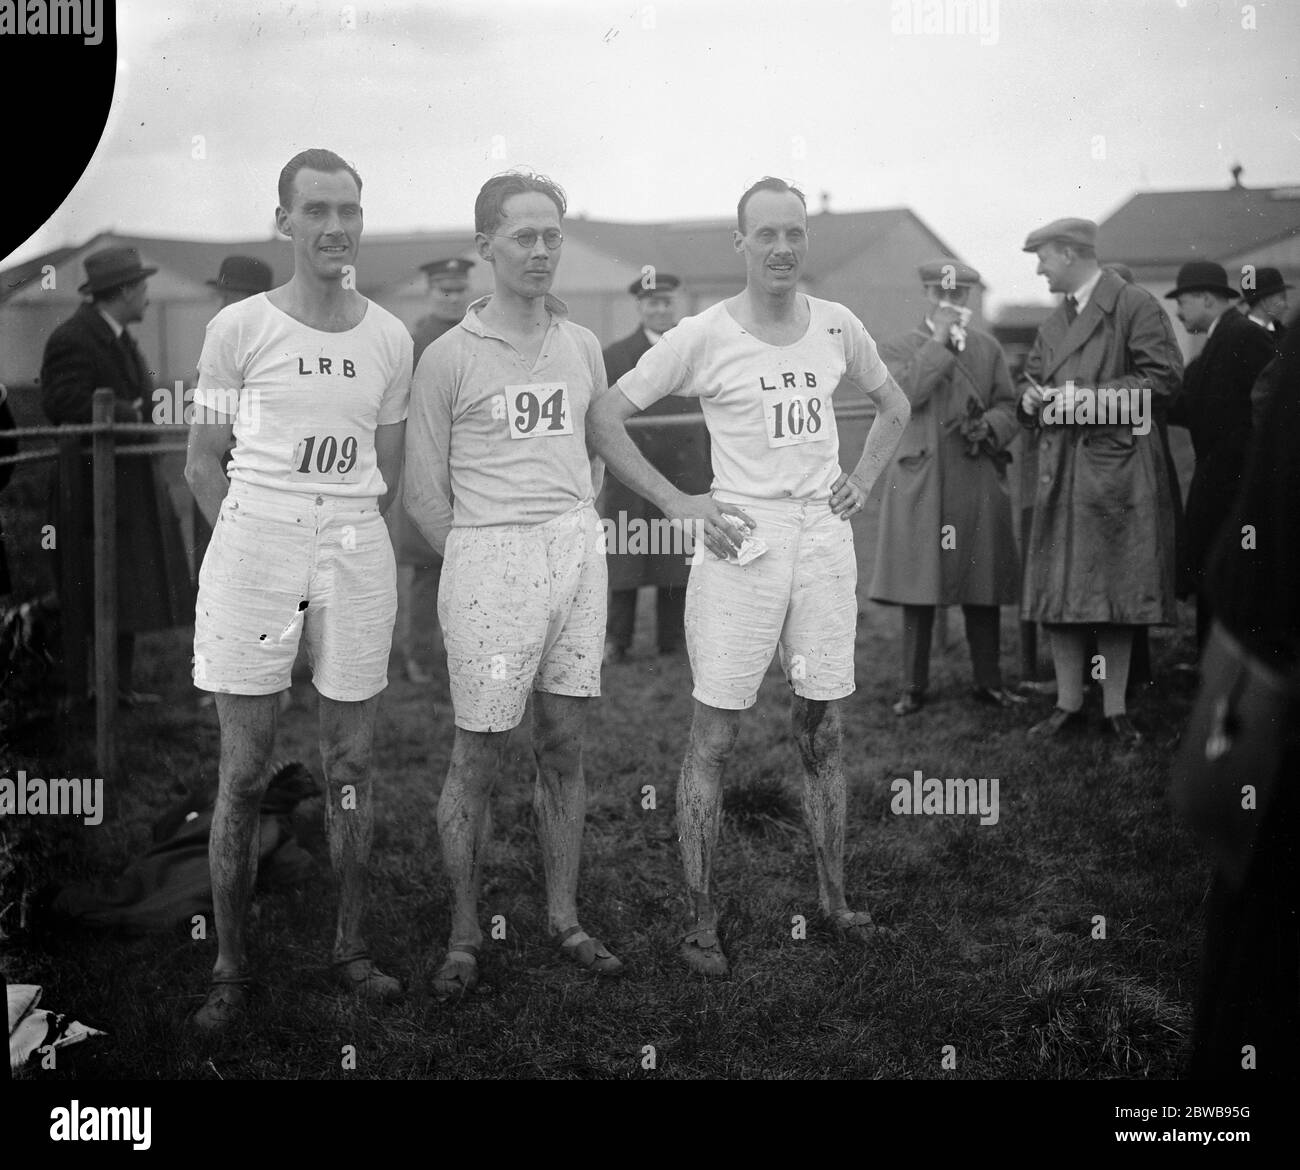 5 millas Cross country Championship en el Aeródromo de la Fuerza Aérea Real, Northolt los tres primeros hombres de izquierda a derecha RFN J N Ovington, L/Cpl J A Callum, y Capt C E Ovington, M C 7 de marzo de 1925 Foto de stock